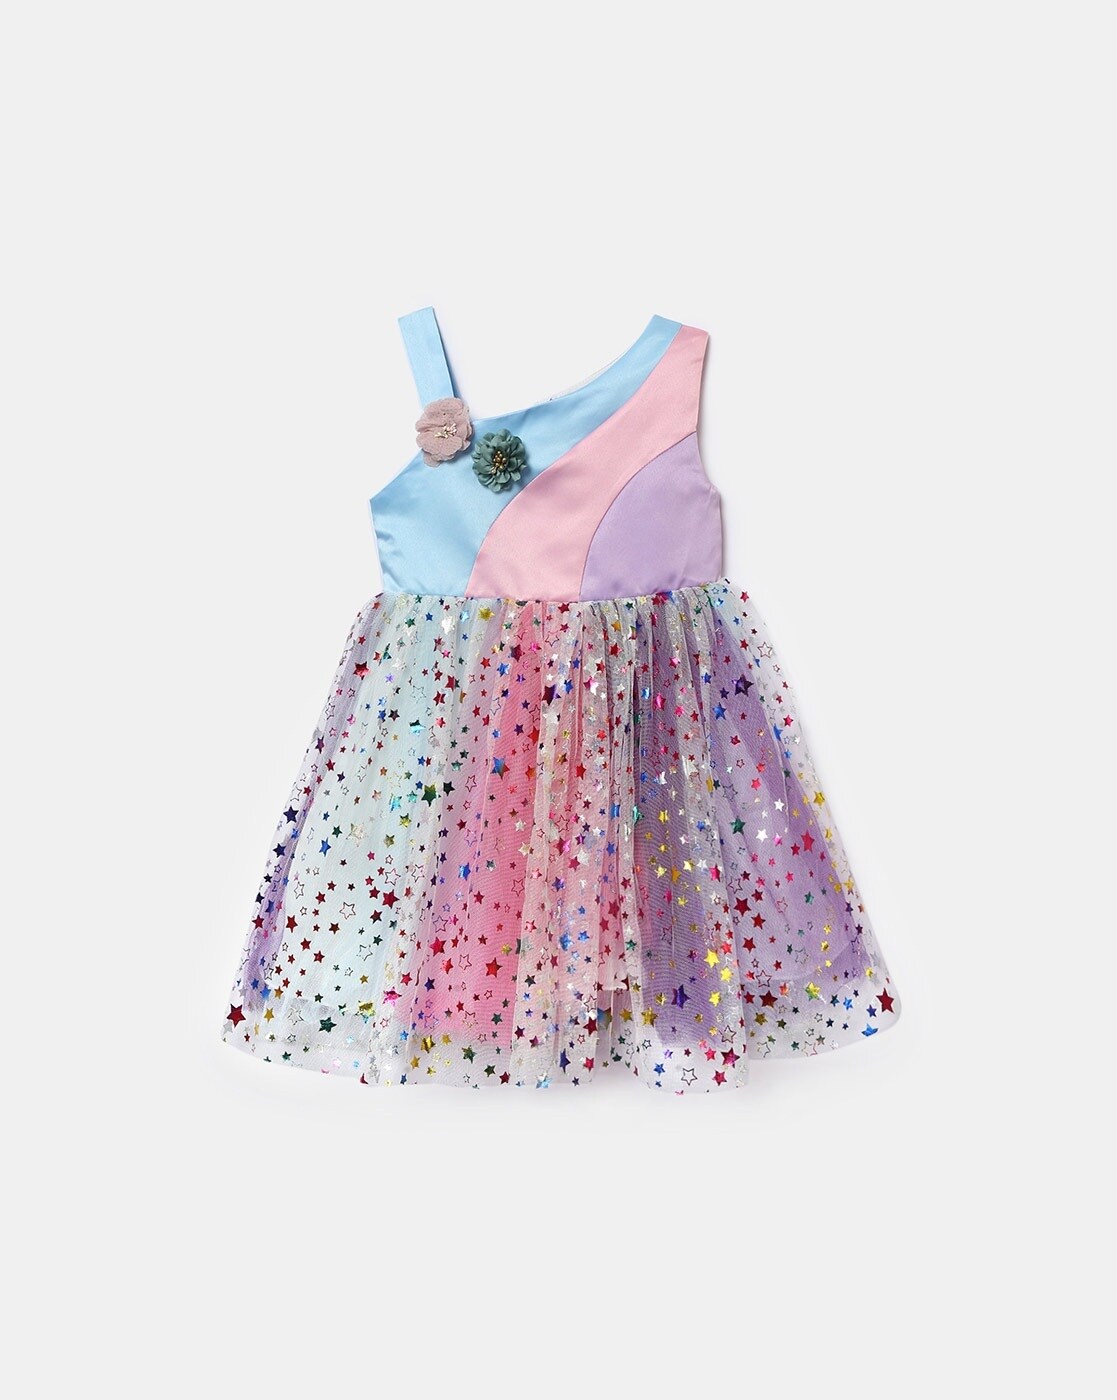 Hopscotch Haul| Baby Dress Haul|Party Dress |Birthday Dress #review  #hopscotchhaul #shopping - YouTube